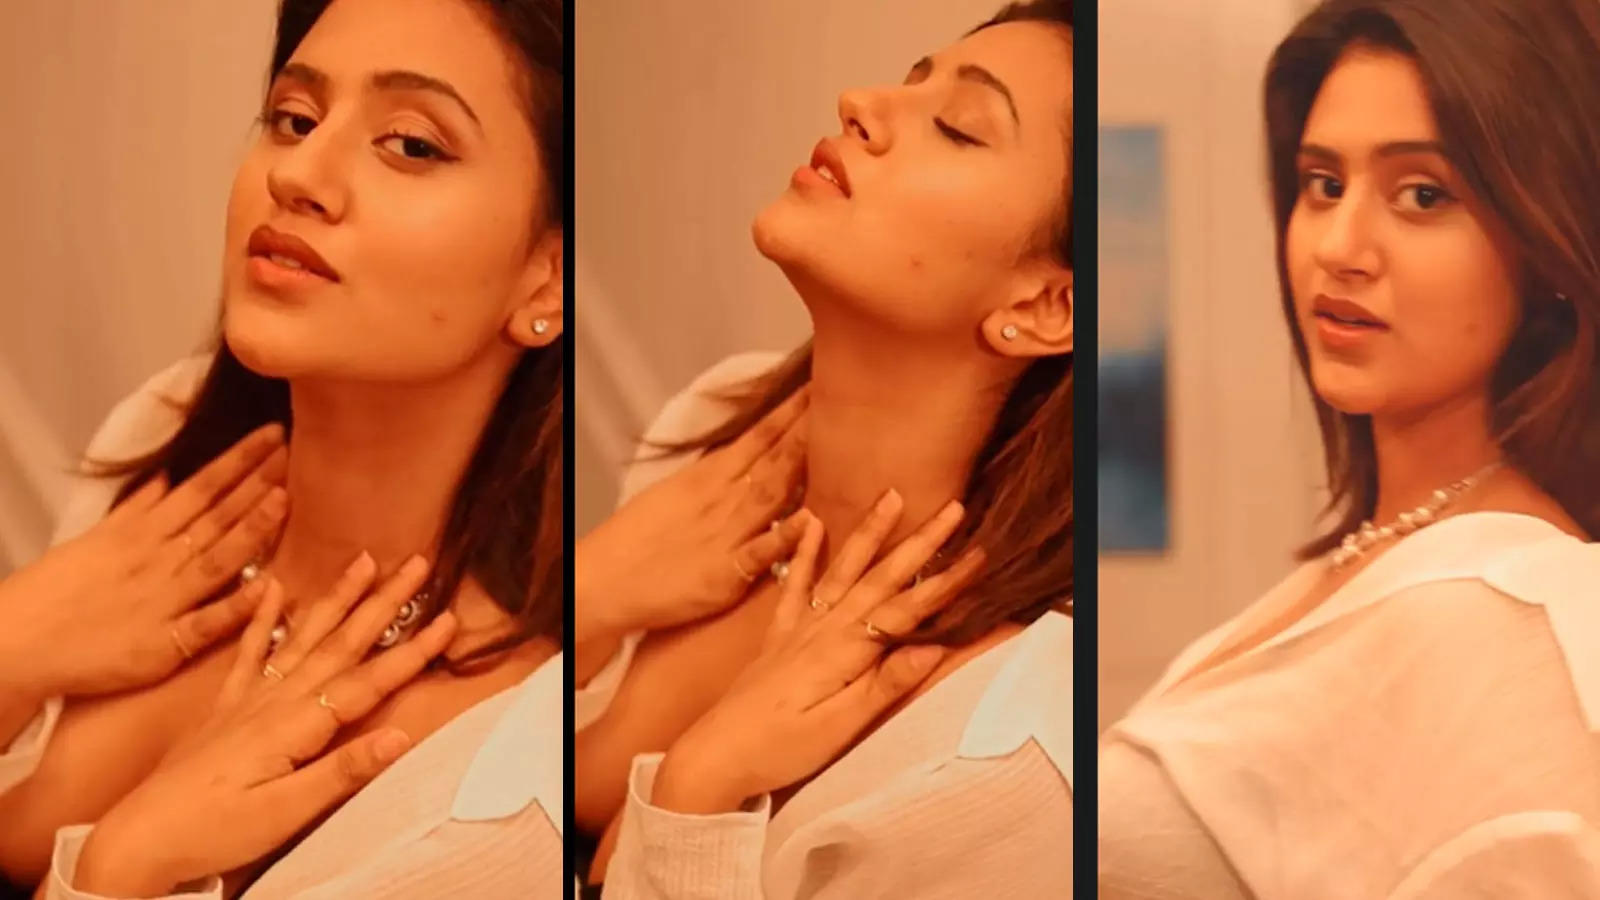 Punjabi Girl 11 To 18 Years Porn Video - Anjali Arora's latest video in unbuttoned white shirt and black bra goes  viral; troll writes, 'Waise MMS badhiya tha aapka' | Hindi Movie News -  Bollywood - Times of India